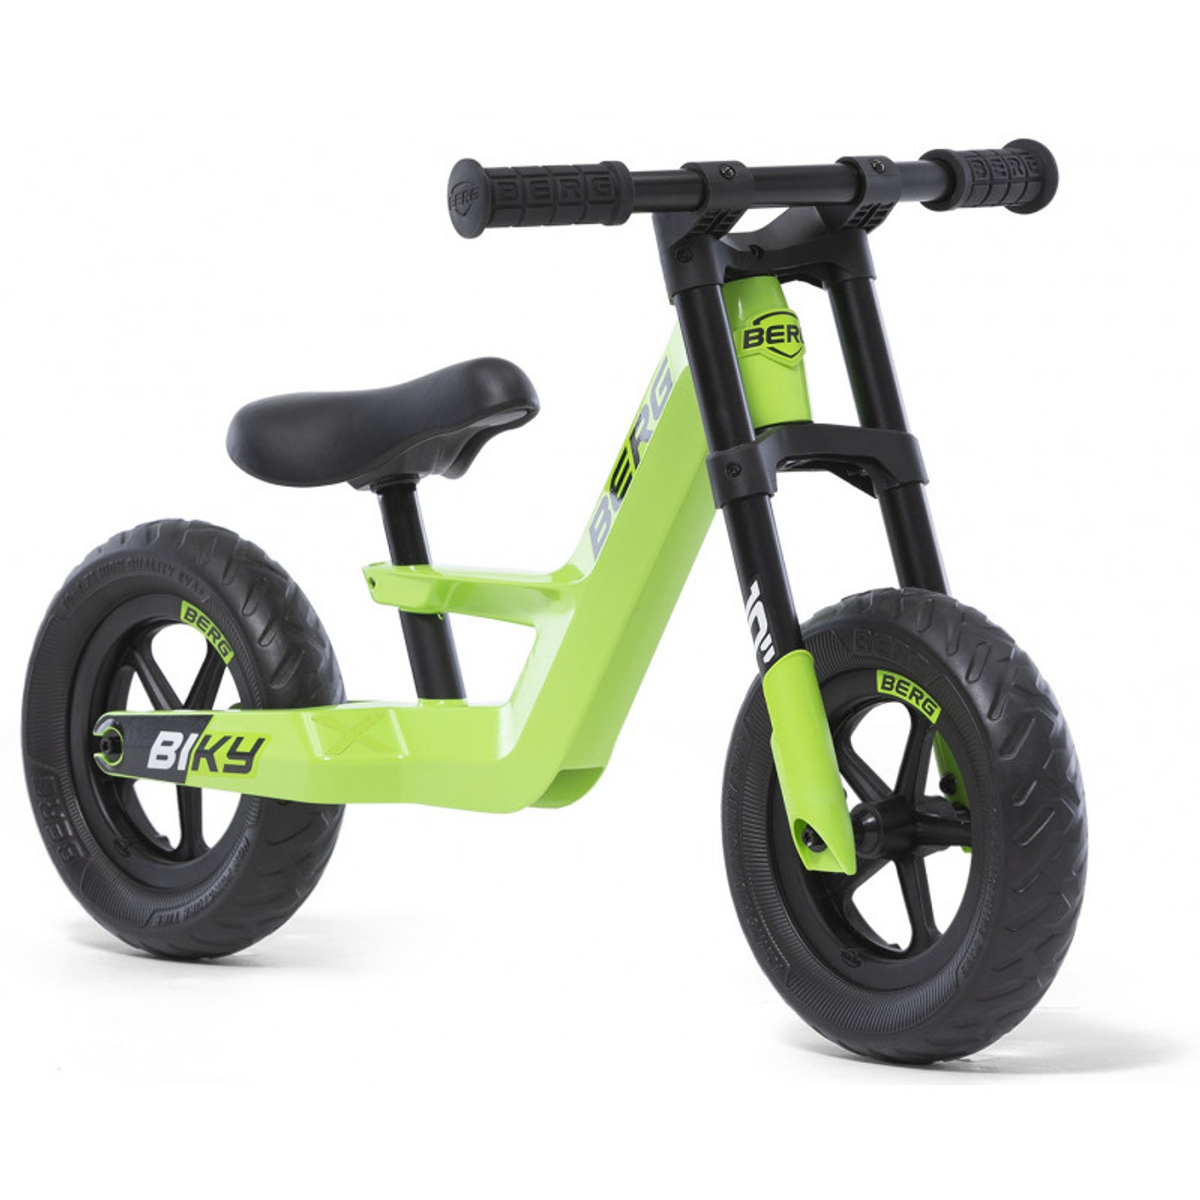  BERG Biky Mini Groen - Loopfiets